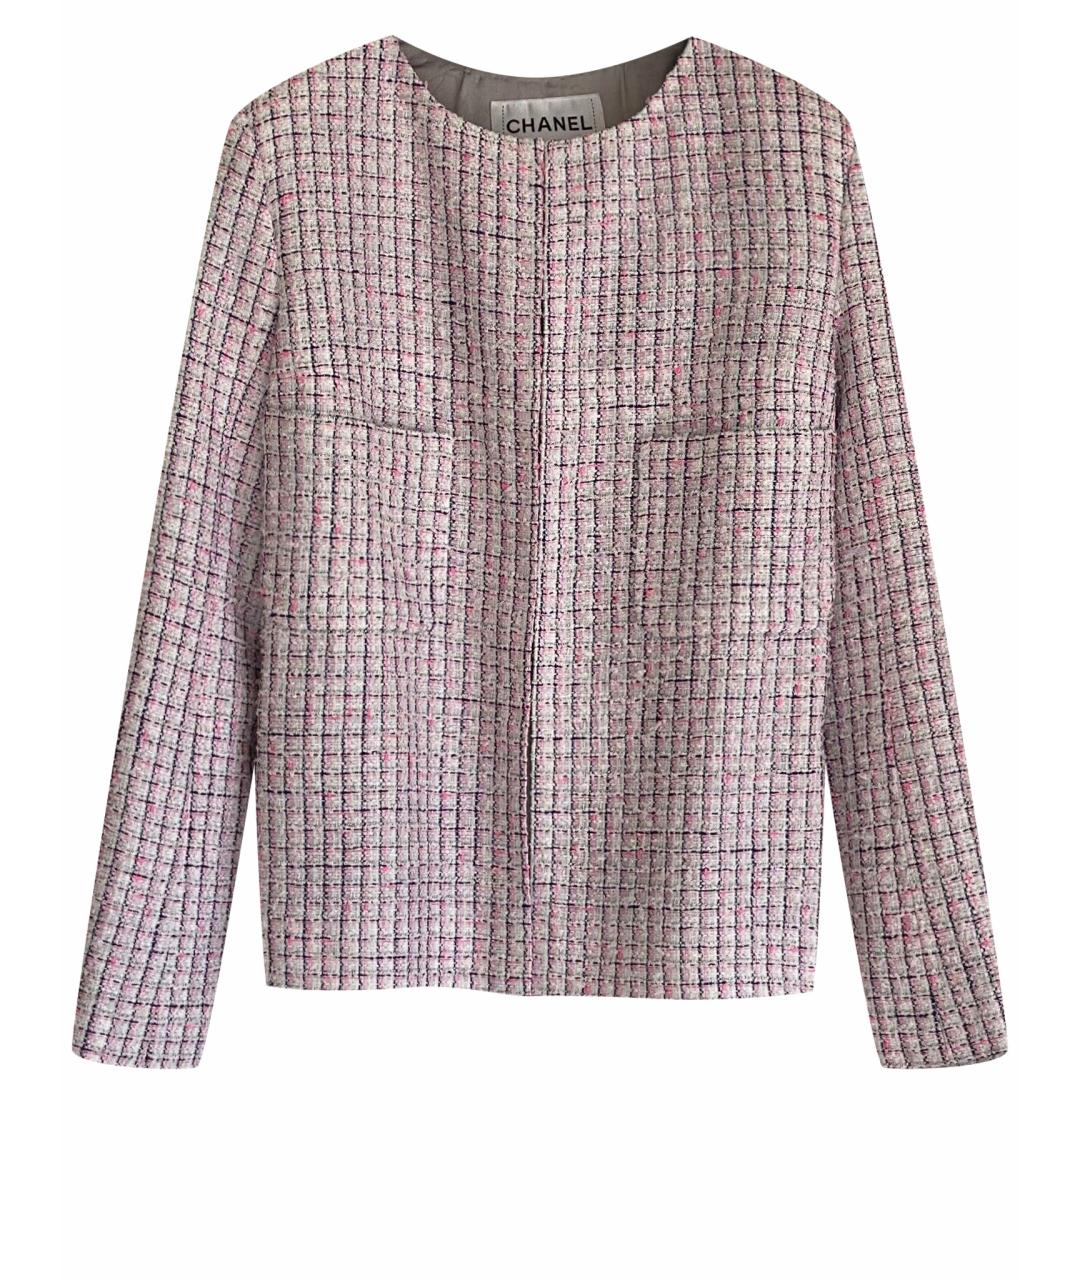 CHANEL PRE-OWNED Розовый жакет/пиджак, фото 1